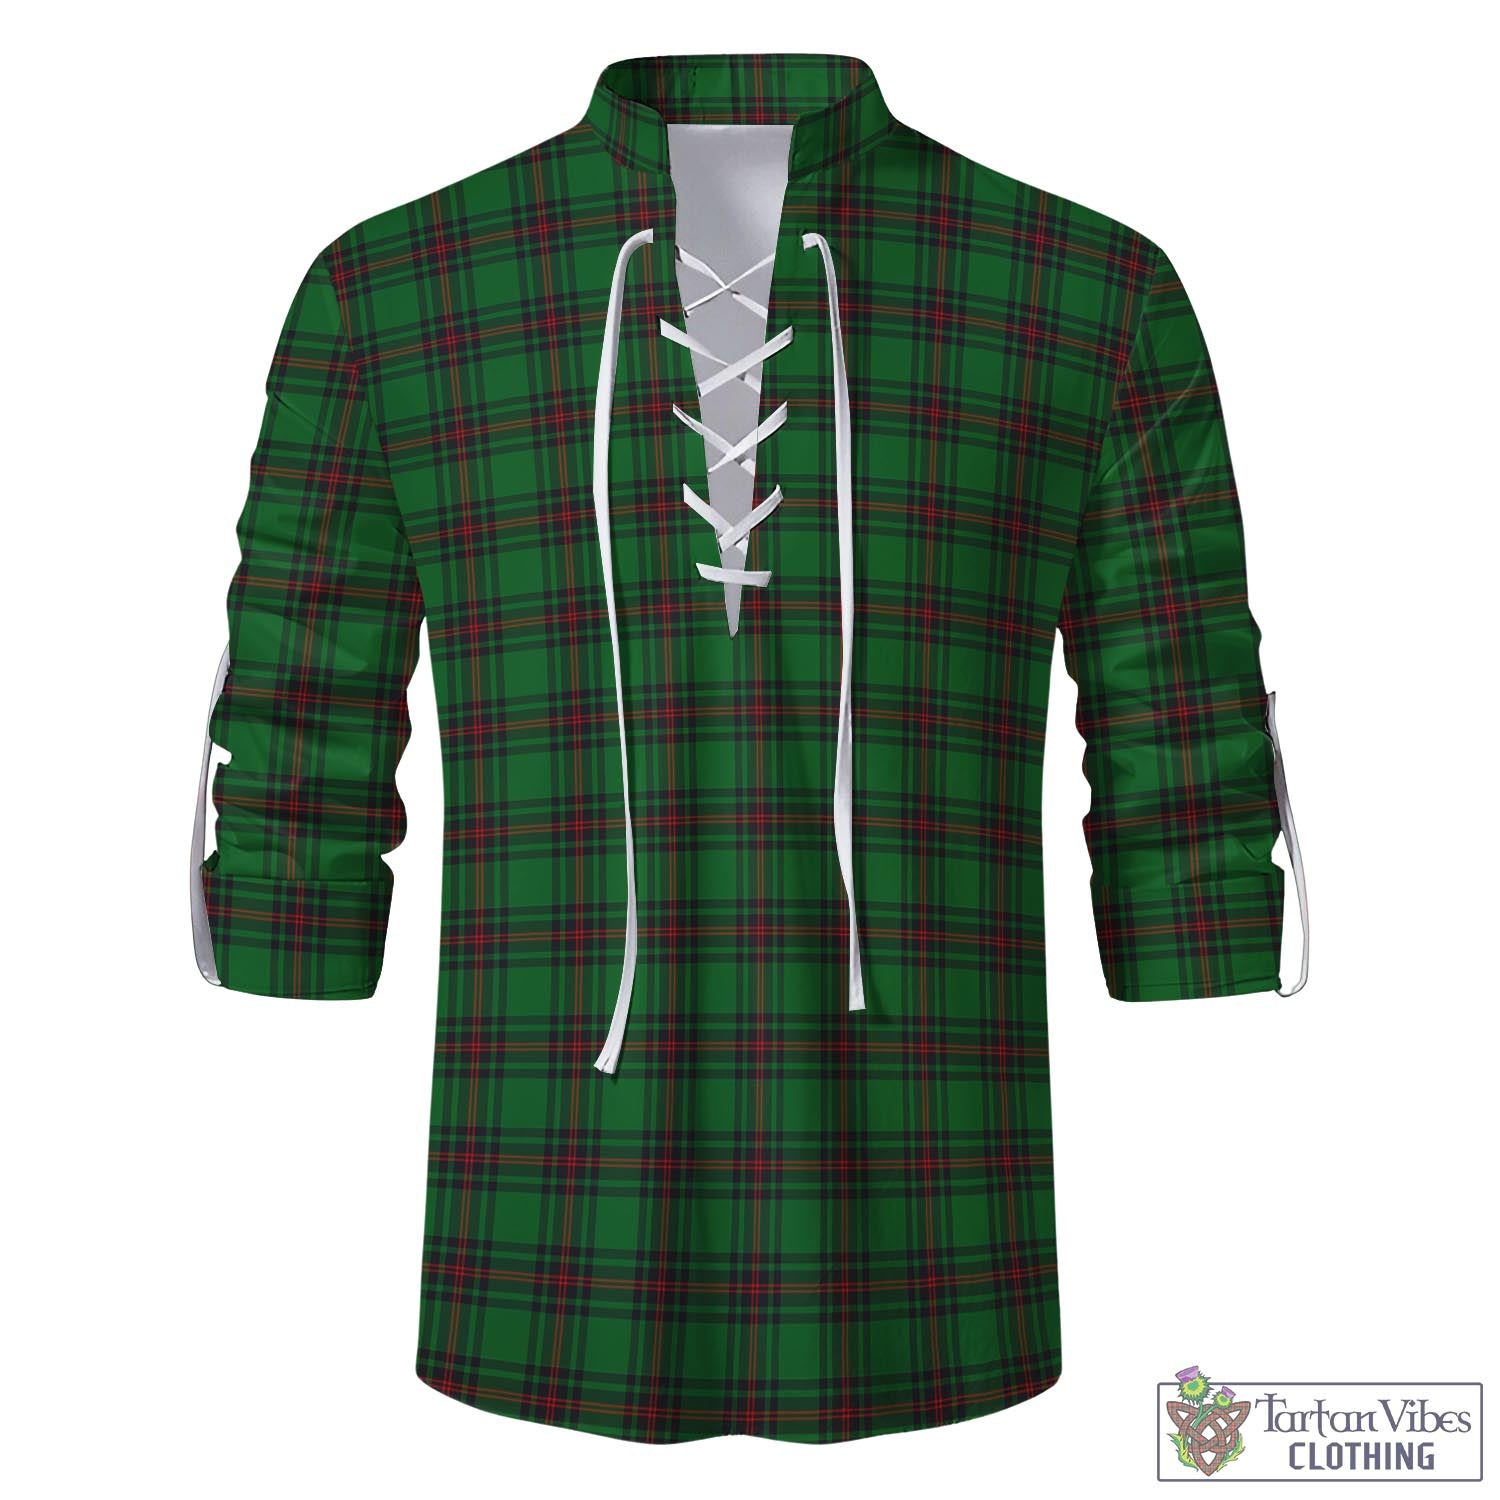 Tartan Vibes Clothing Halkett Tartan Men's Scottish Traditional Jacobite Ghillie Kilt Shirt